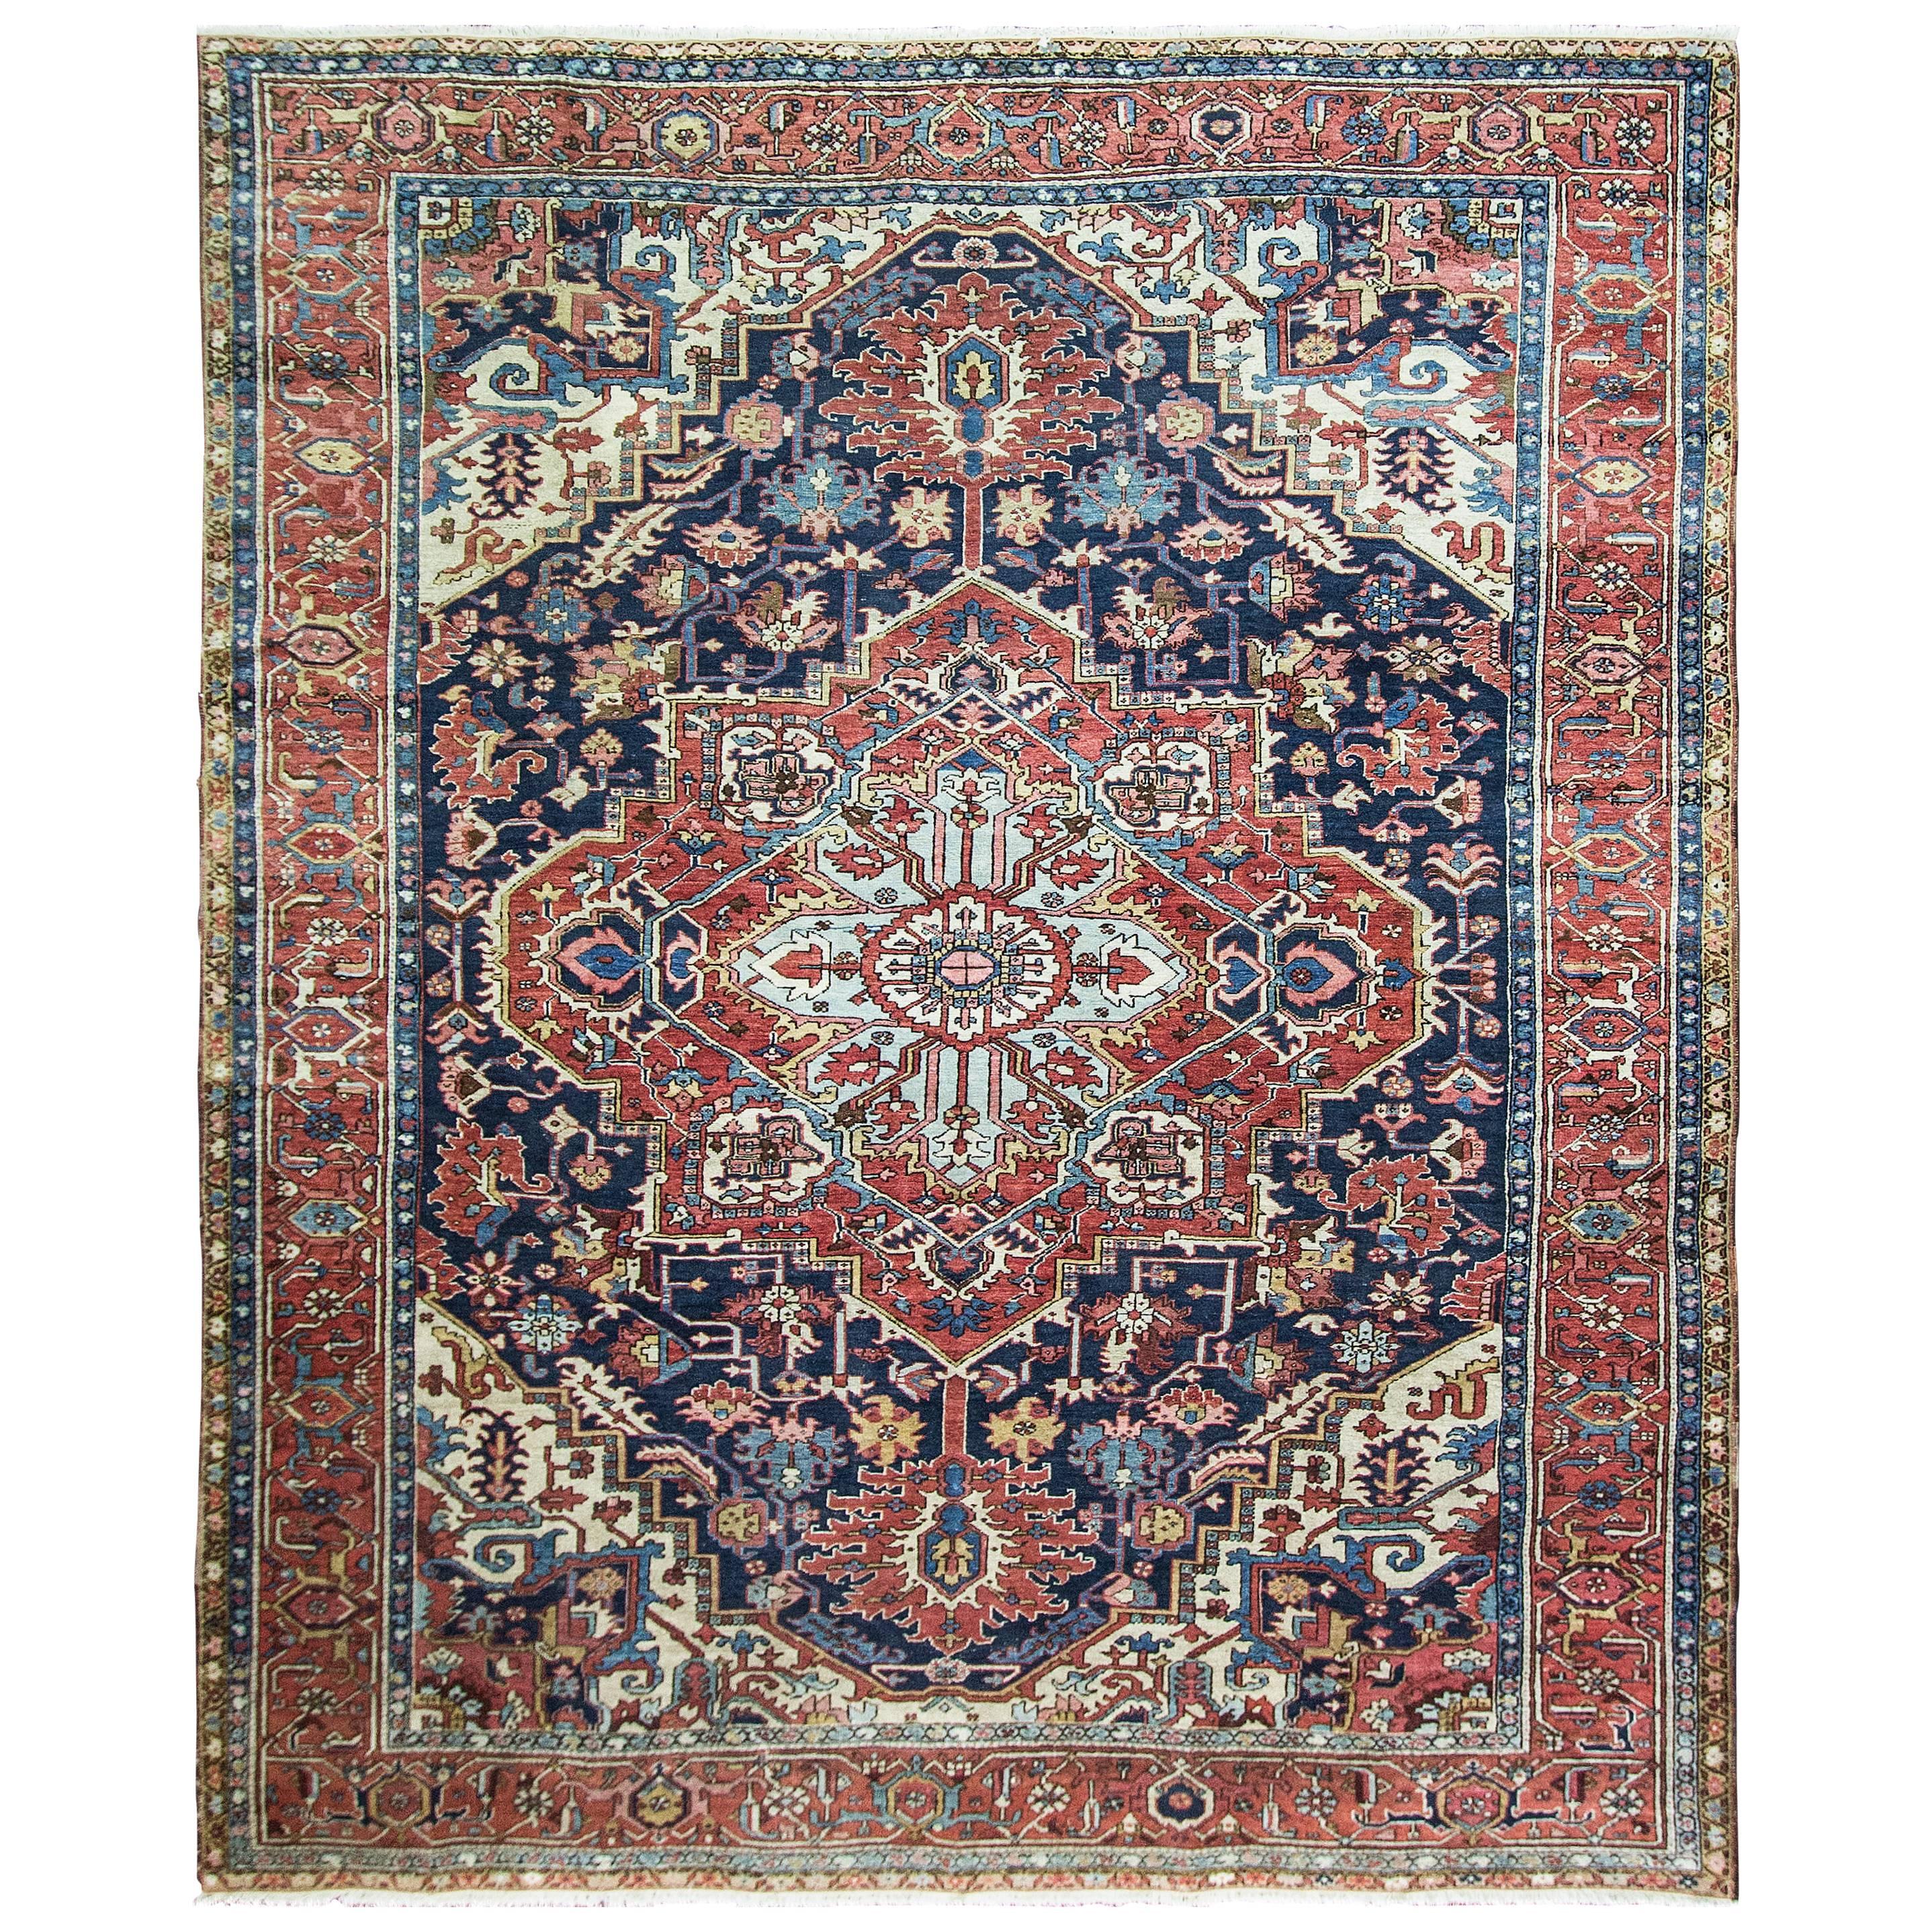 Antique Serapi/ Karajah Baft Carpet